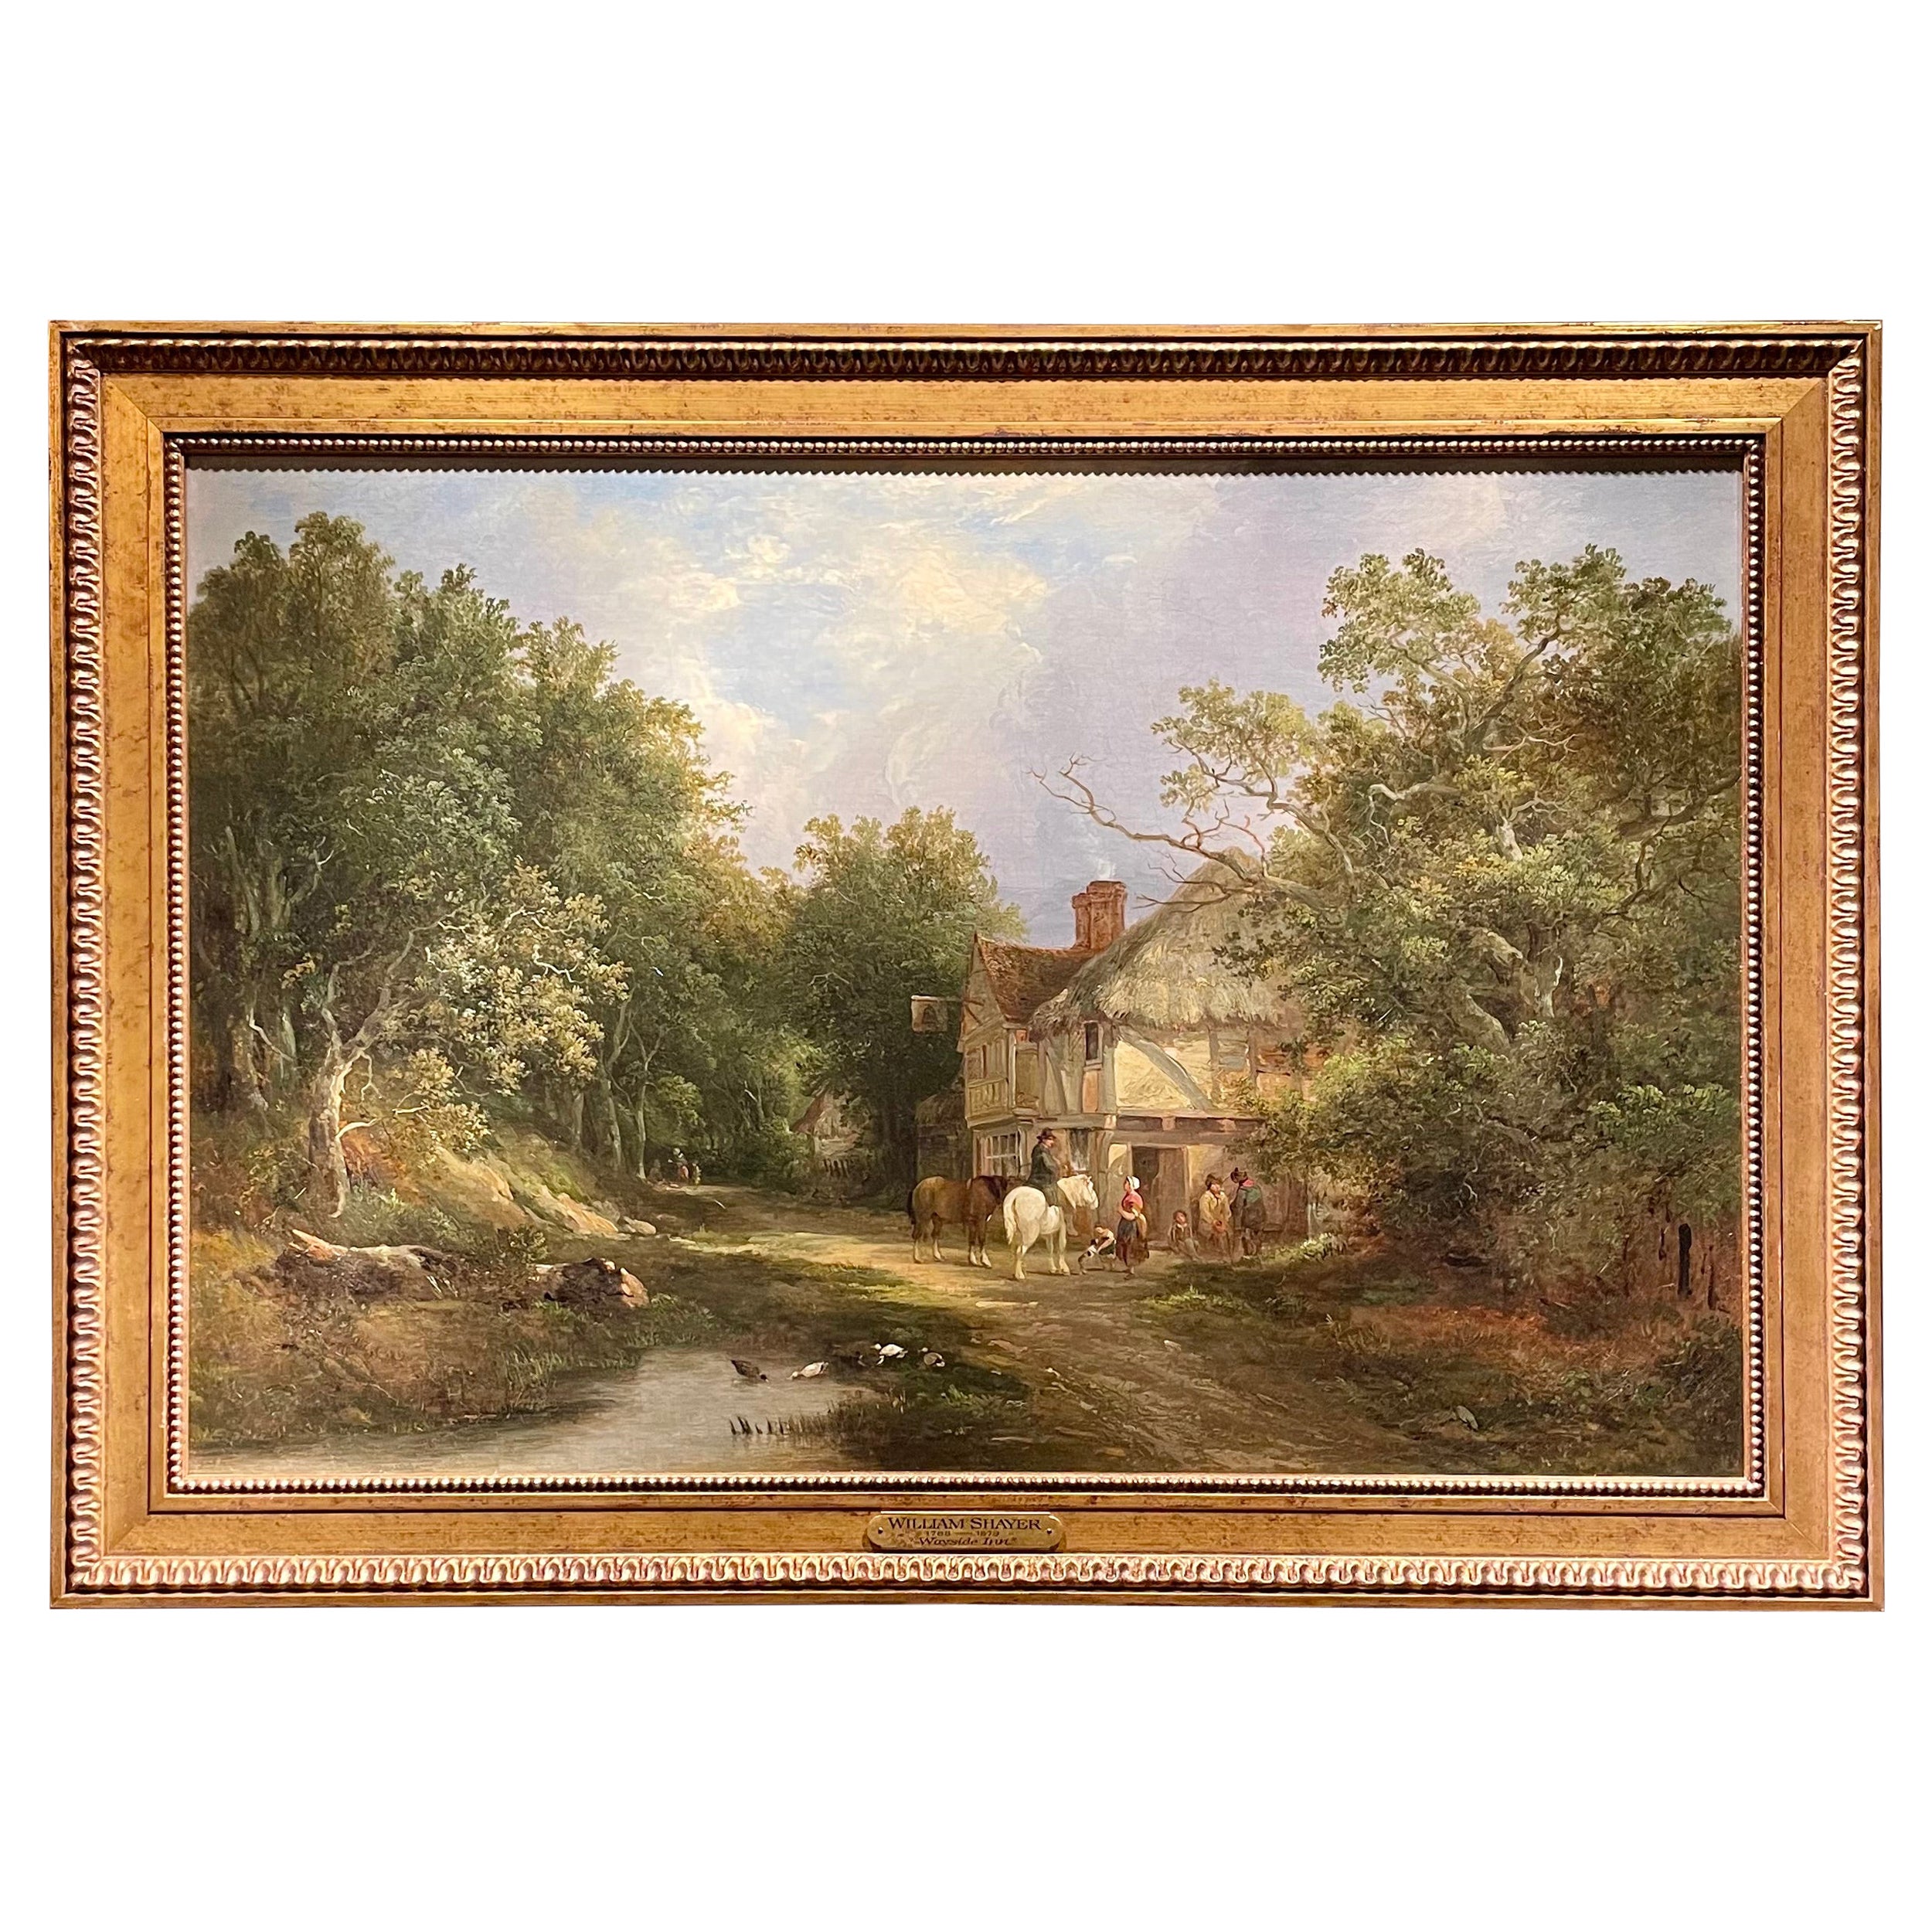 Antique Oil on Canvas Landscape Painting by British Artist "William Shayer, Sr."